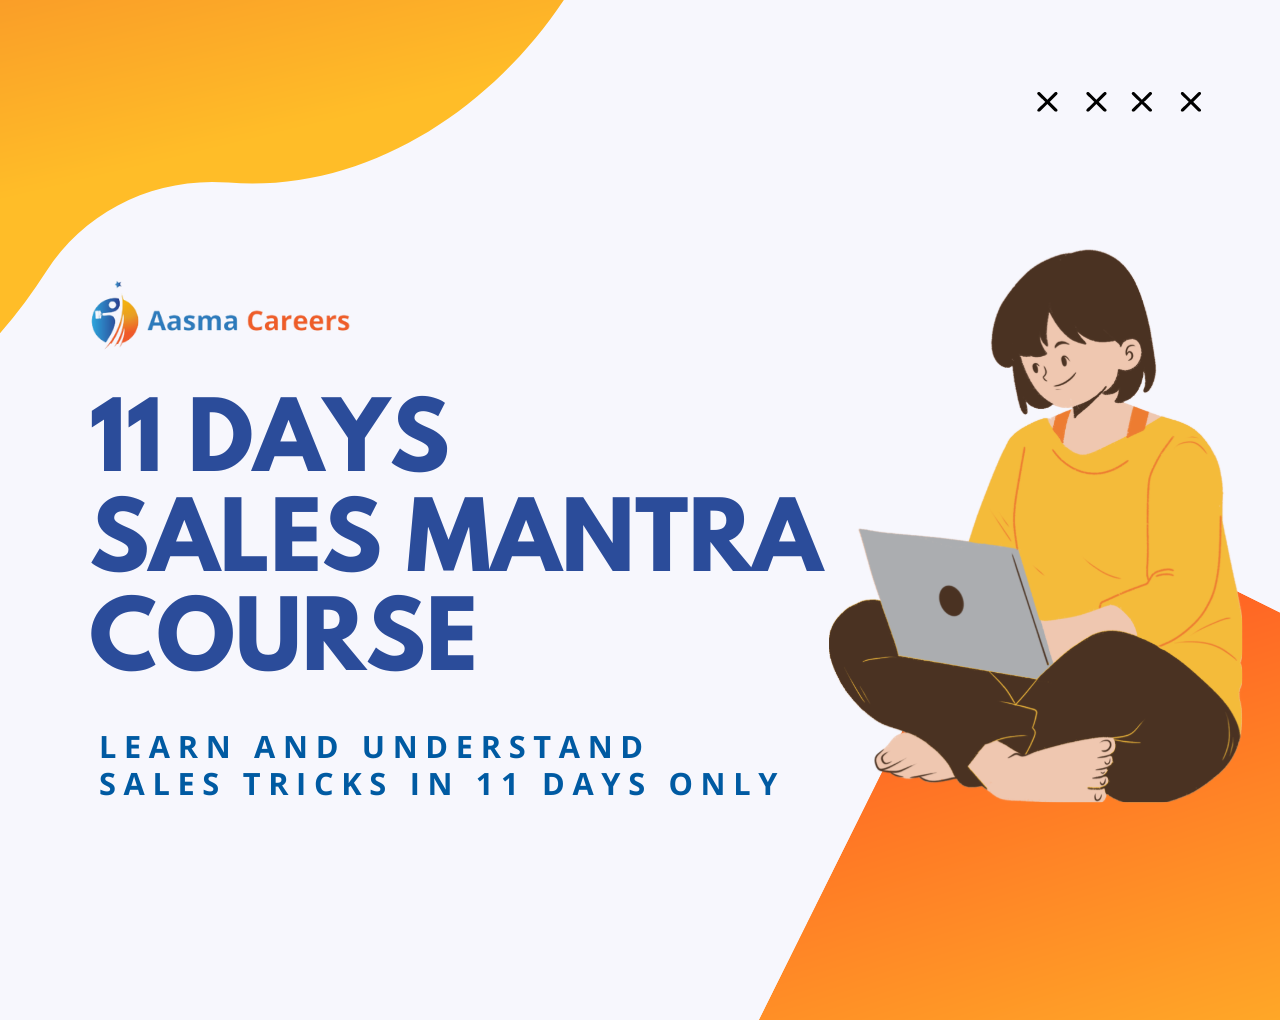 11 Days Sales Mantra Course